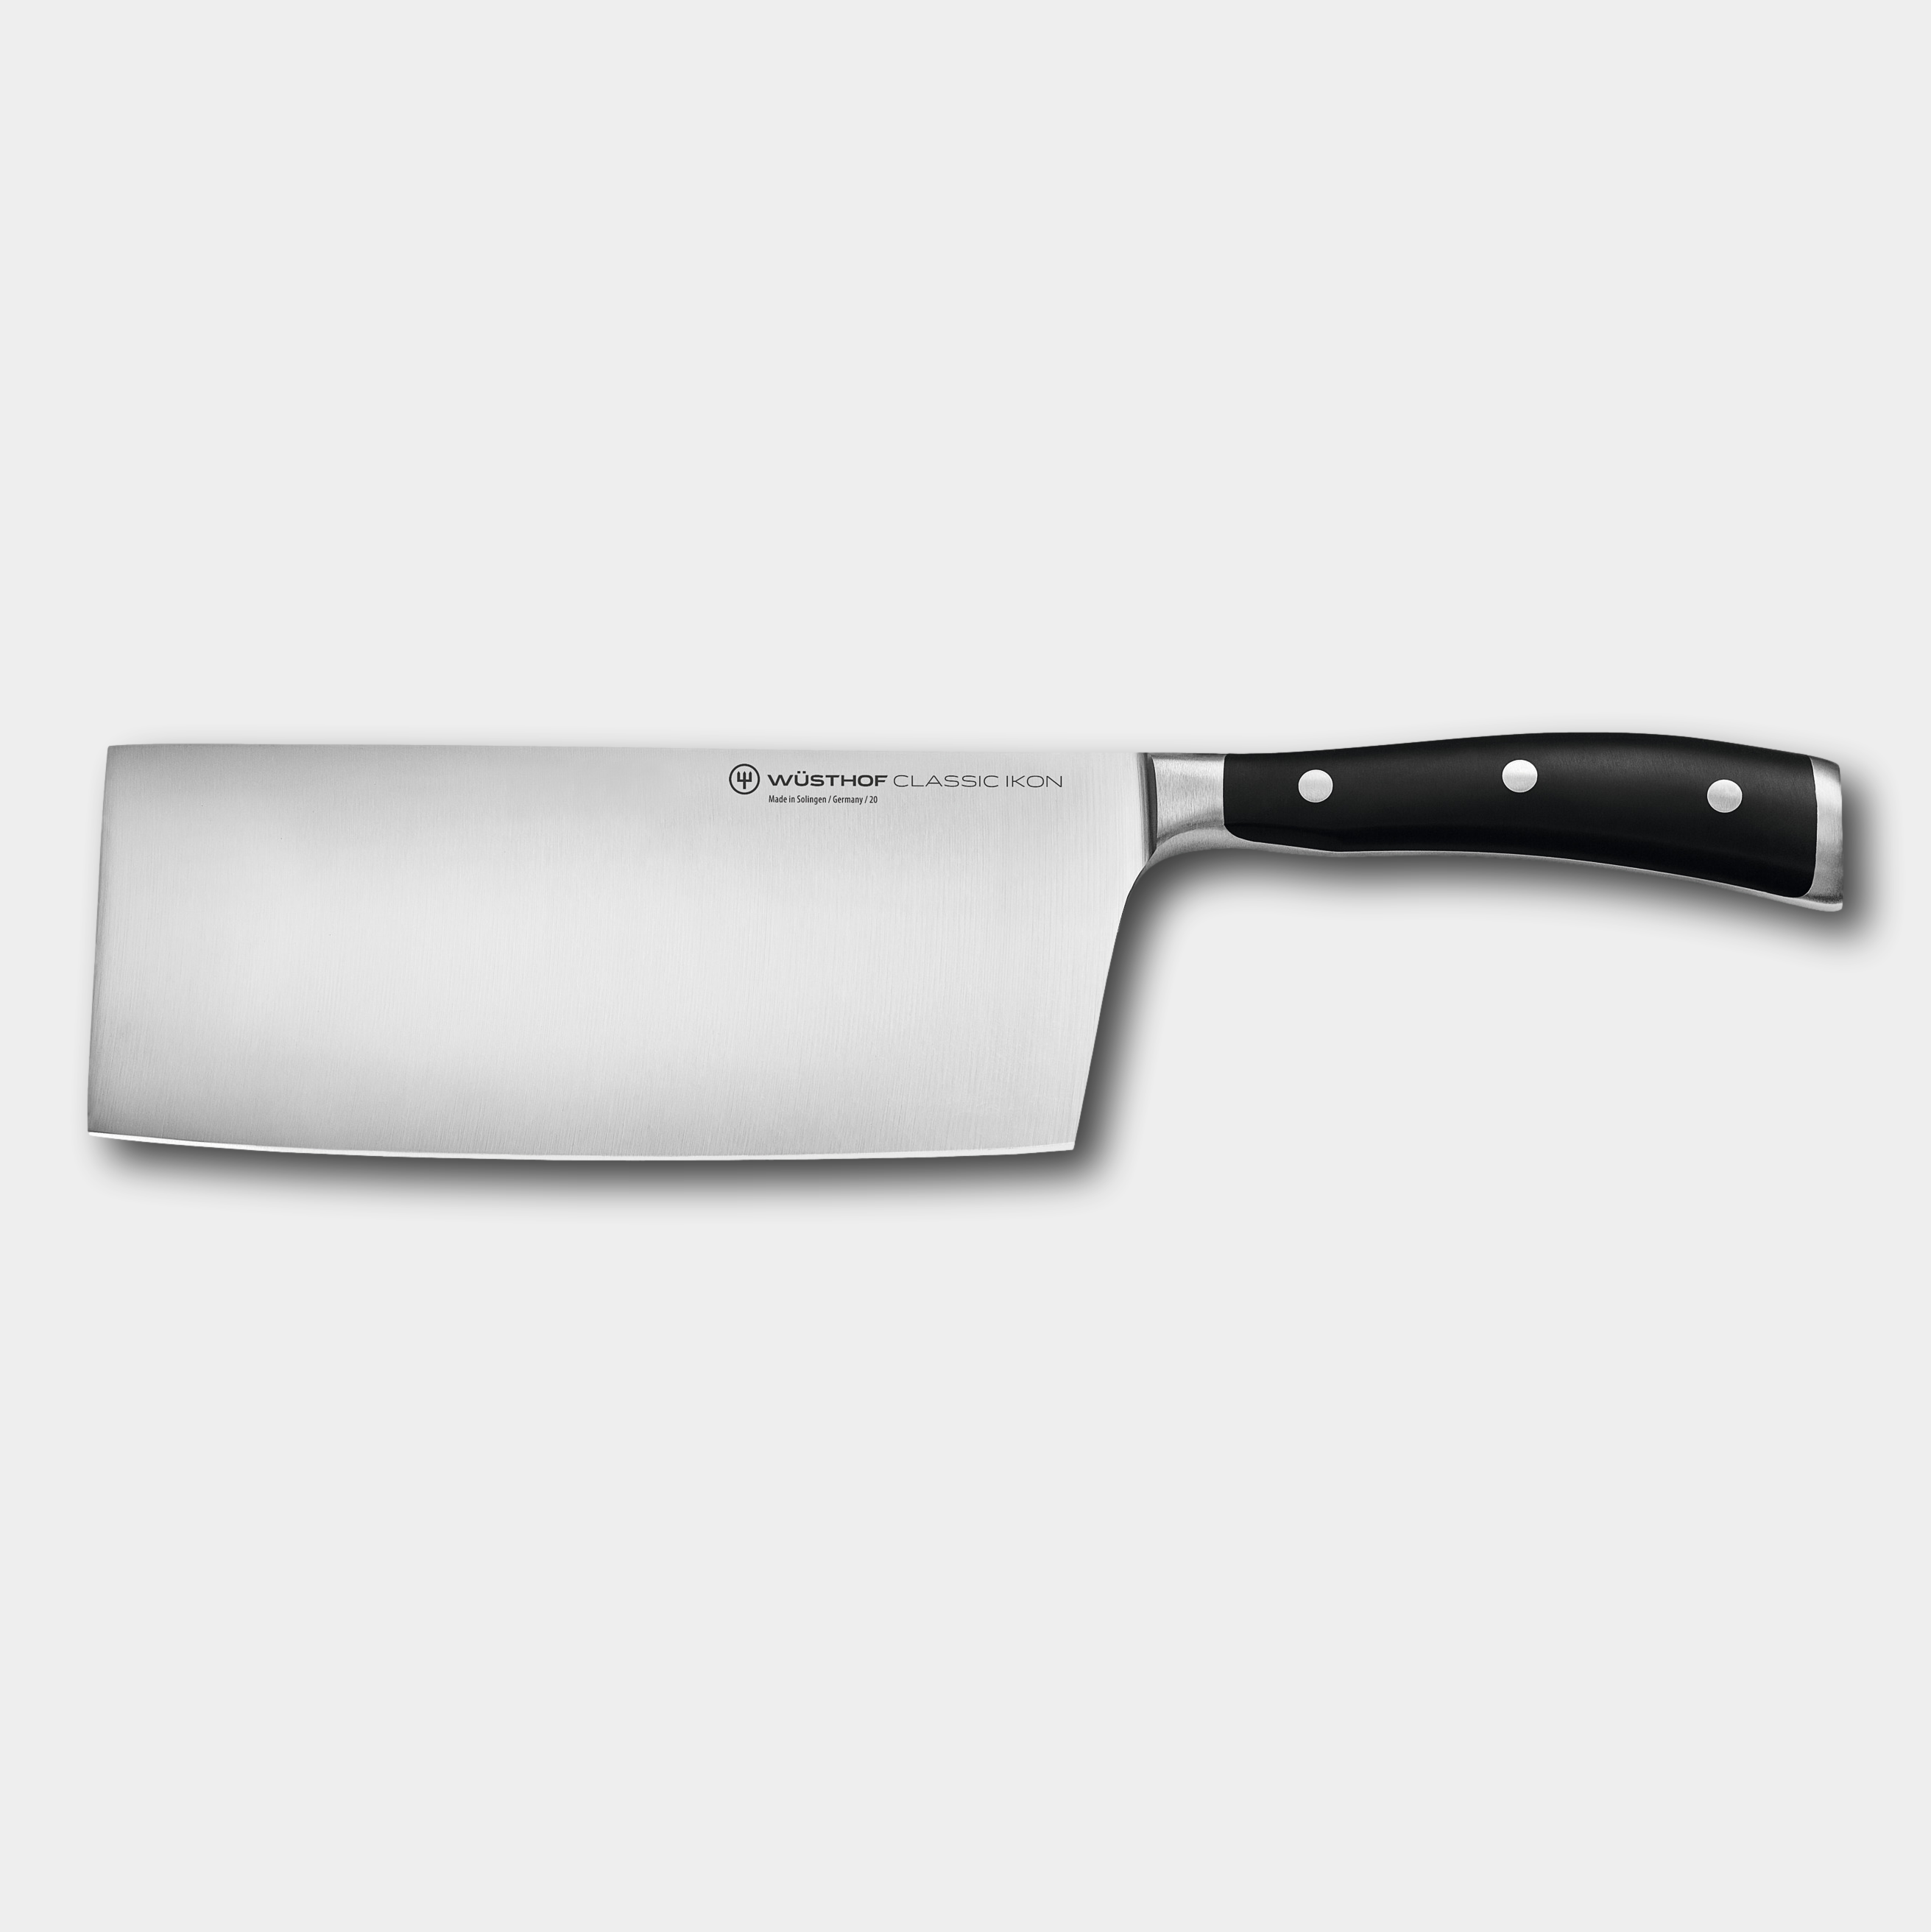 Wusthof Classic IKON 18cm Chinese Chef's Knife